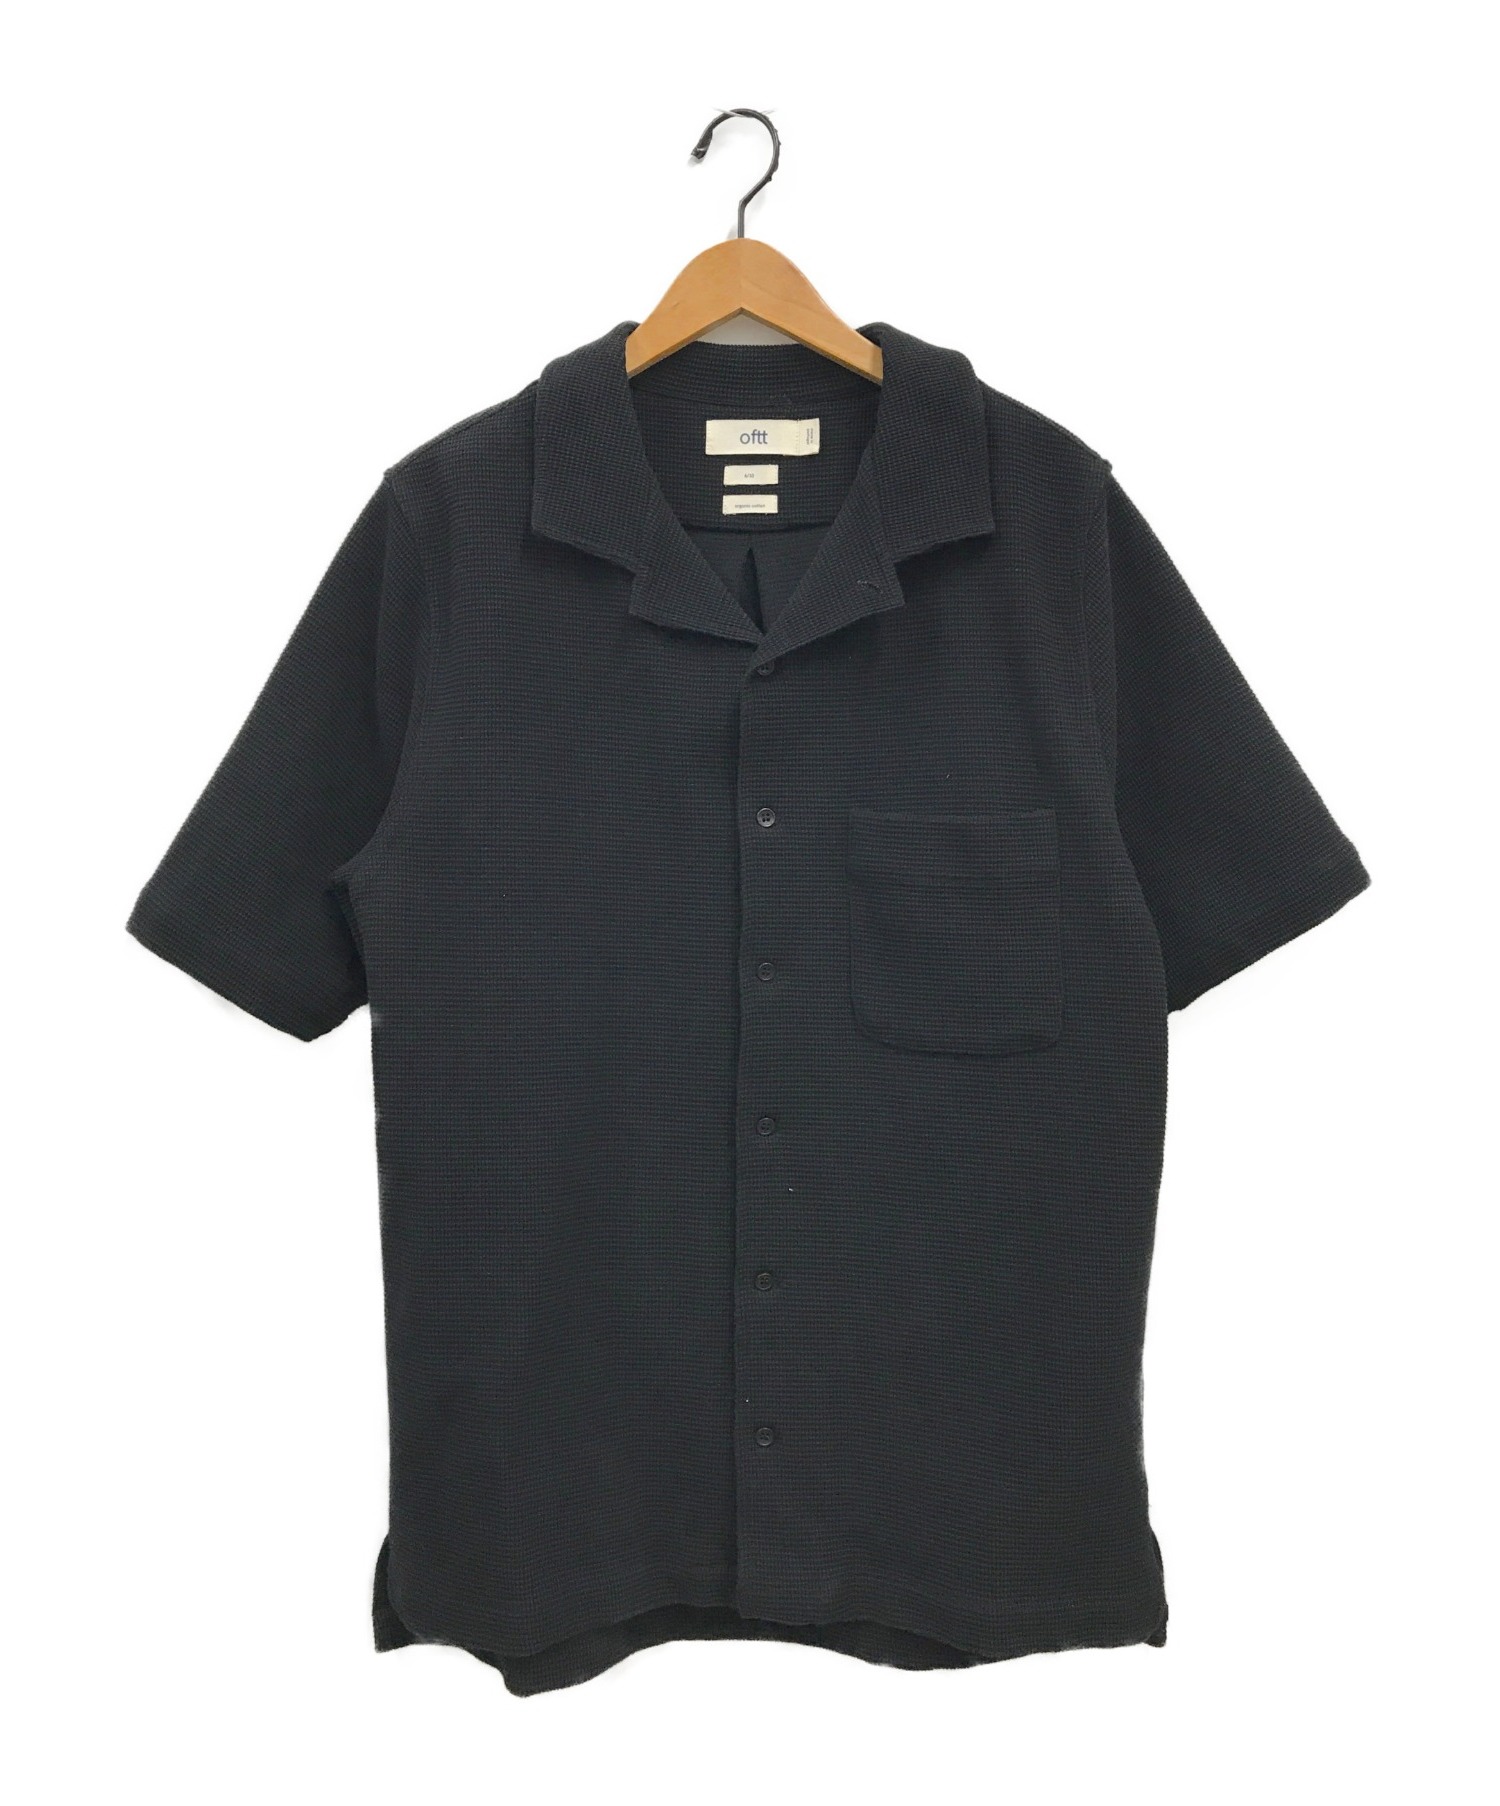 oftt (オフト) ワッフルオープンカラーシャツ ブラック サイズ:M